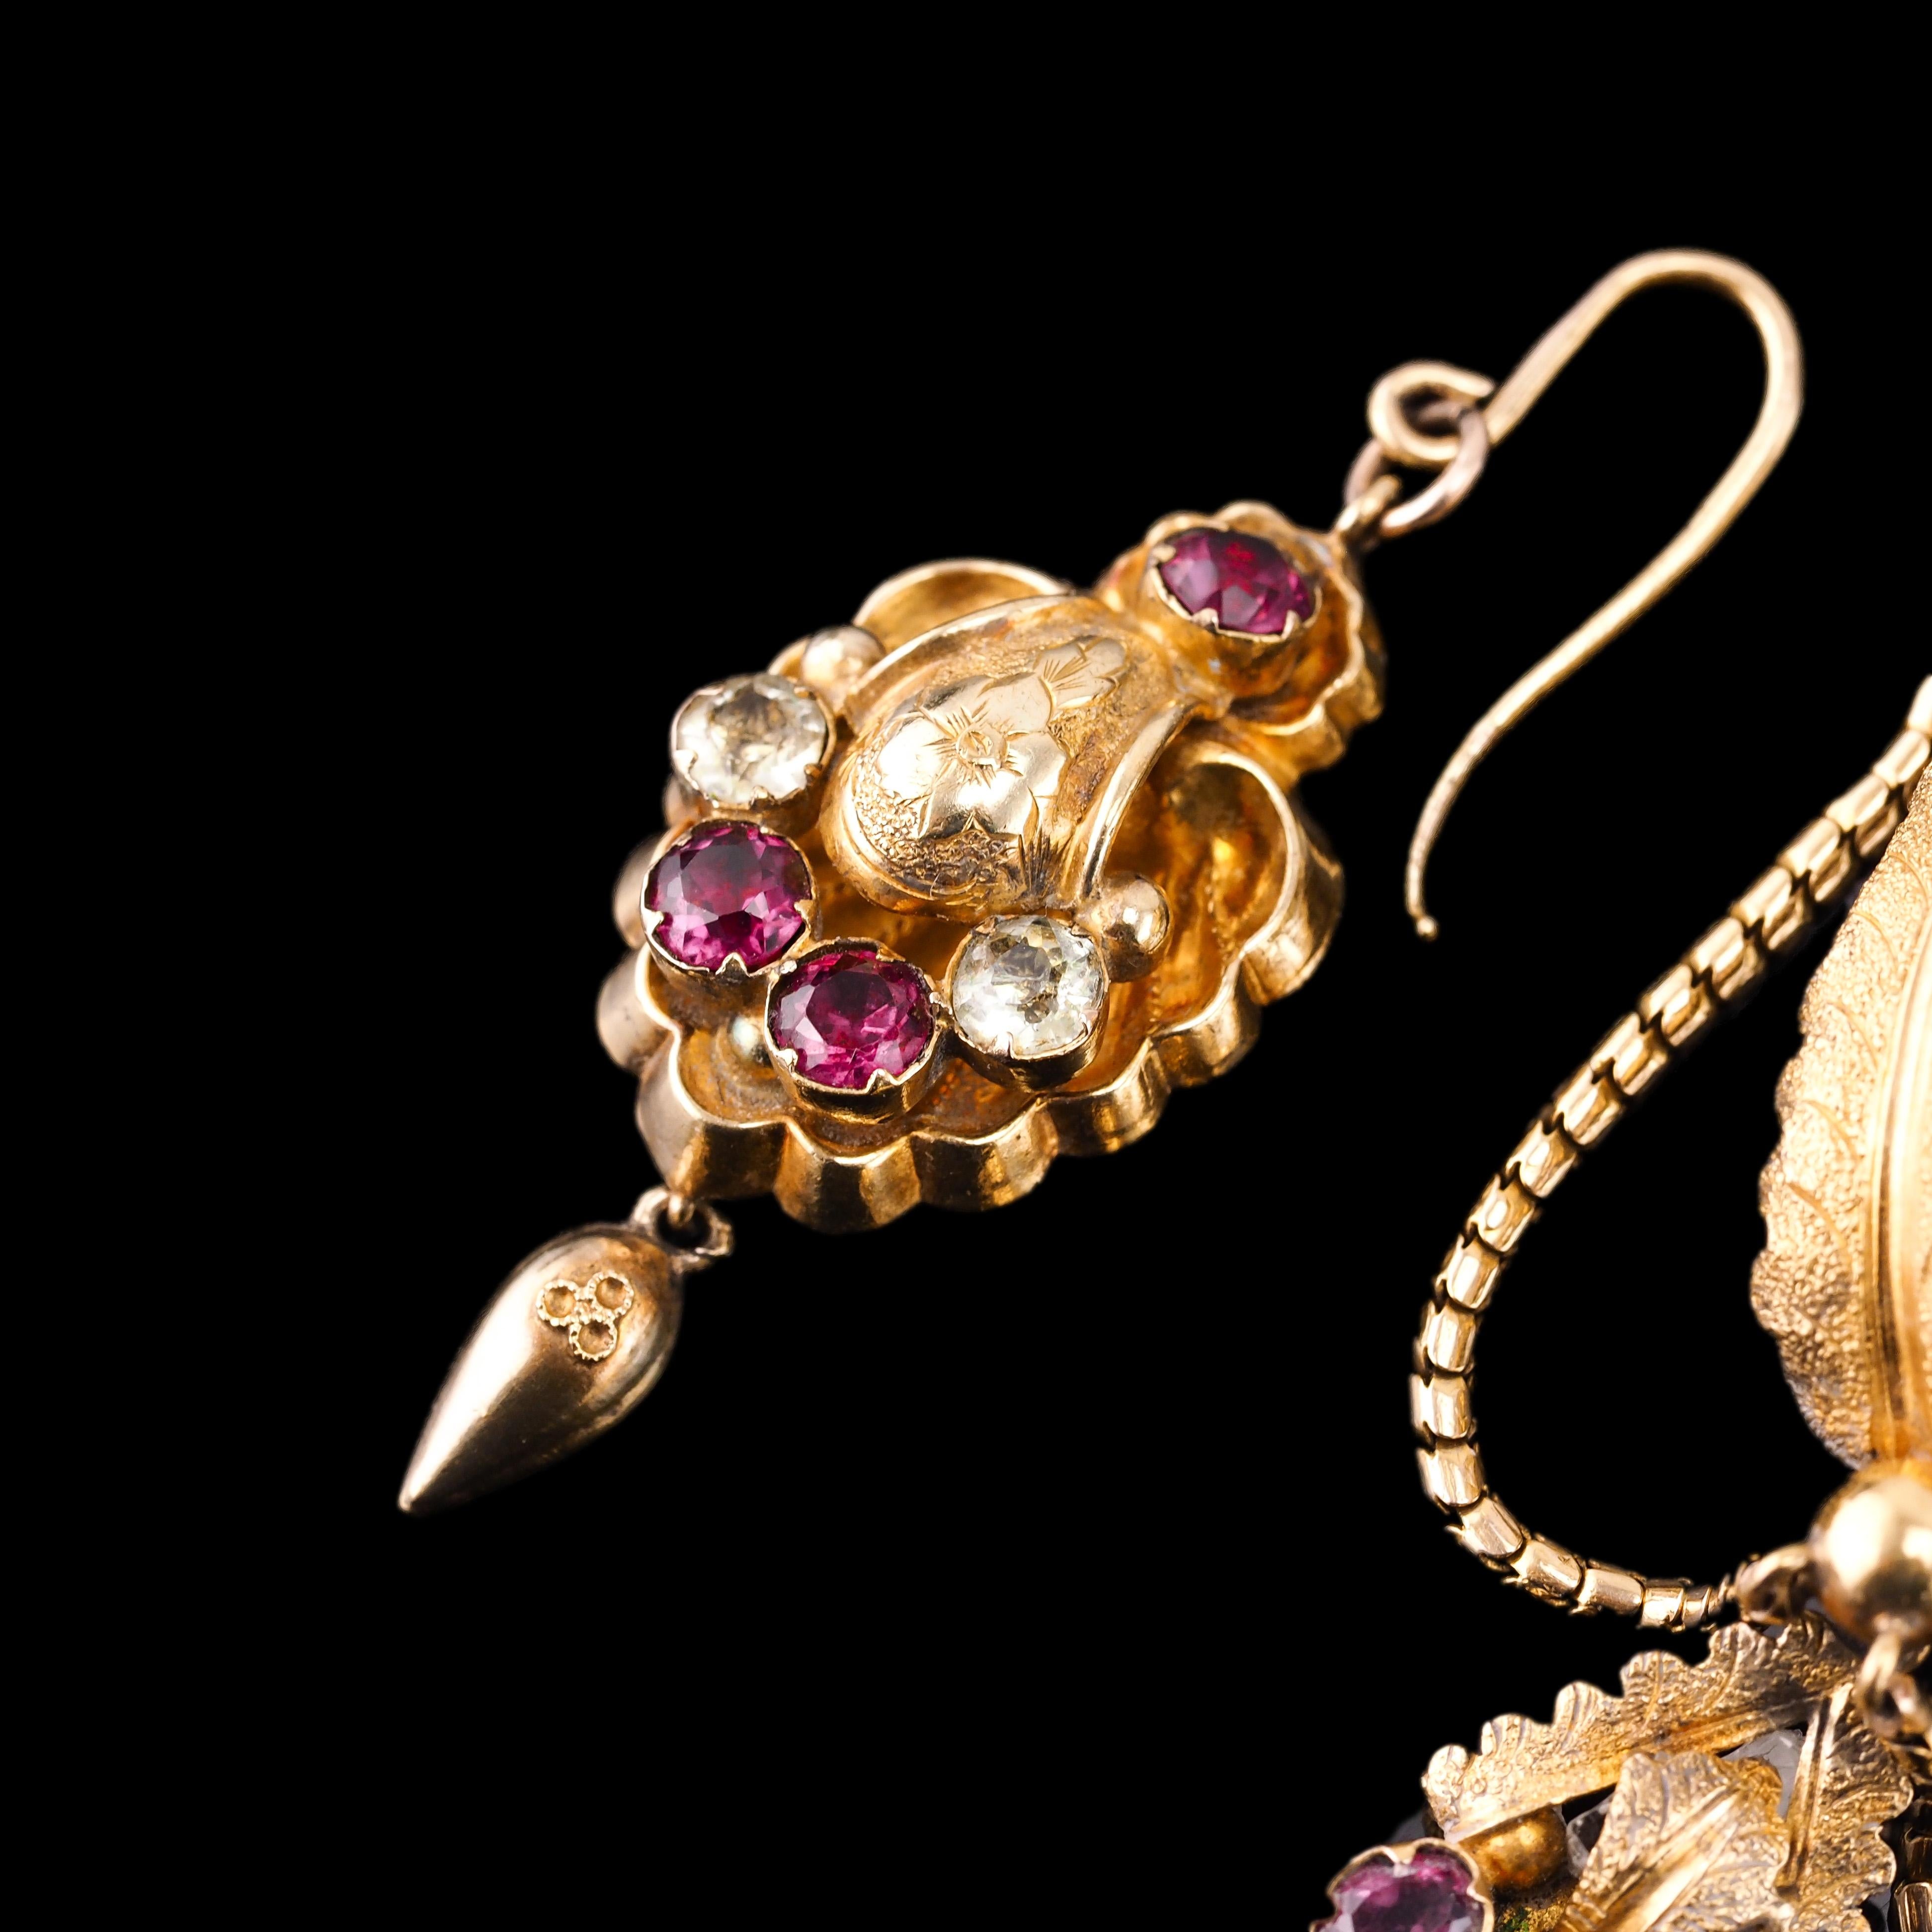 Antique 18K Gold Brooch Pendant & Earrings Garnet & Chrysoberyl - c.1870 12